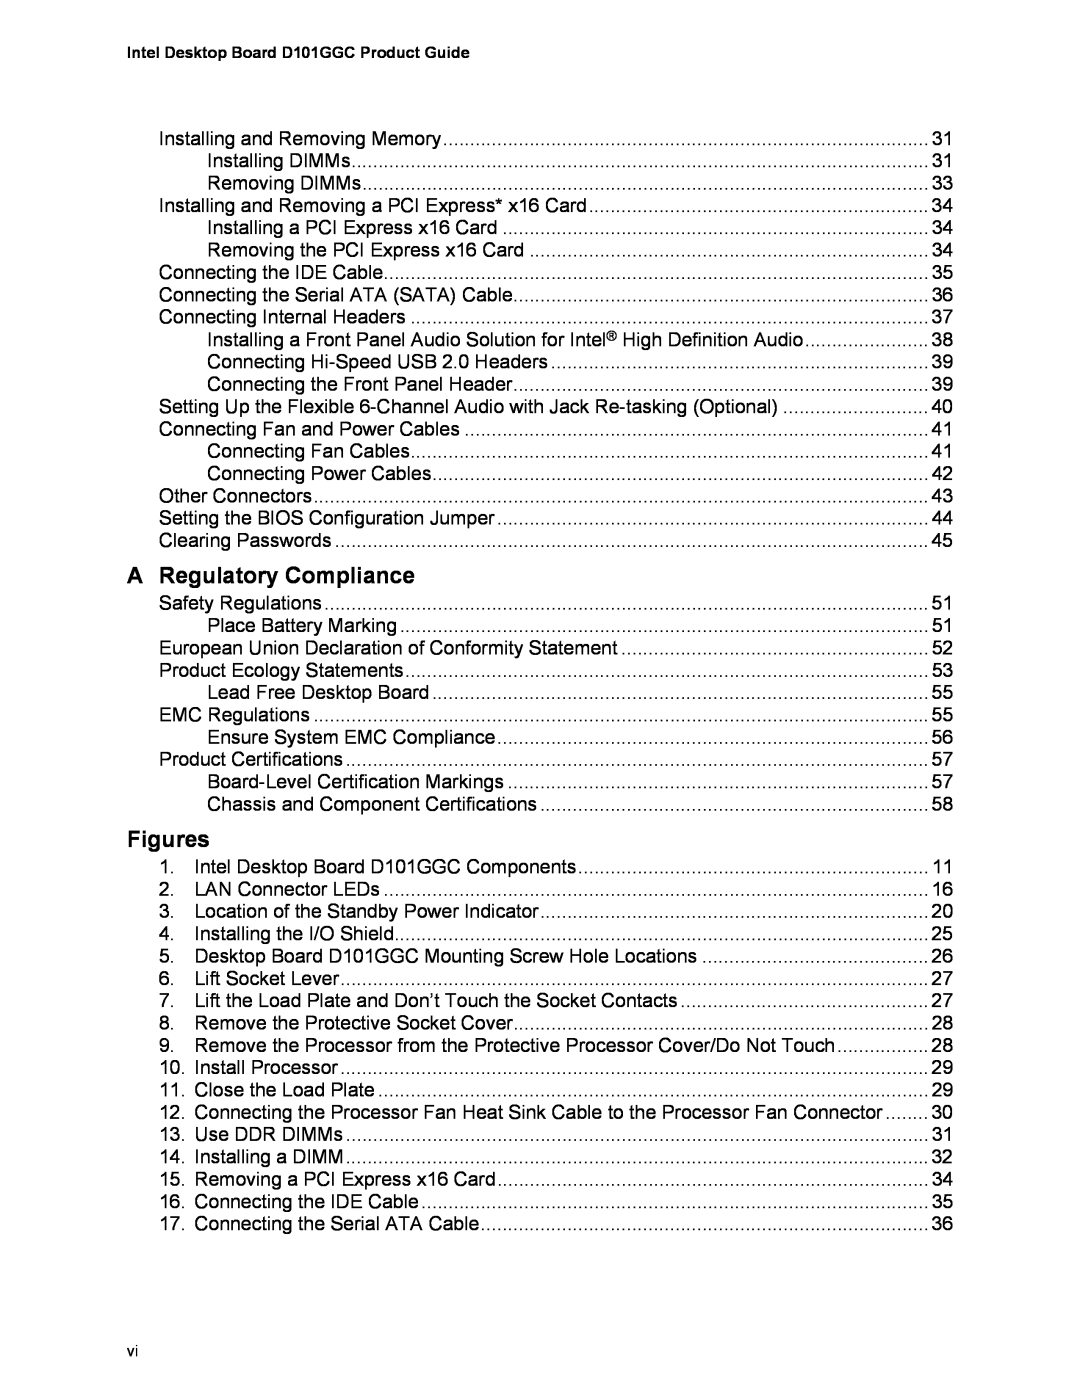 Intel D101GGC manual A Regulatory Compliance, Figures 